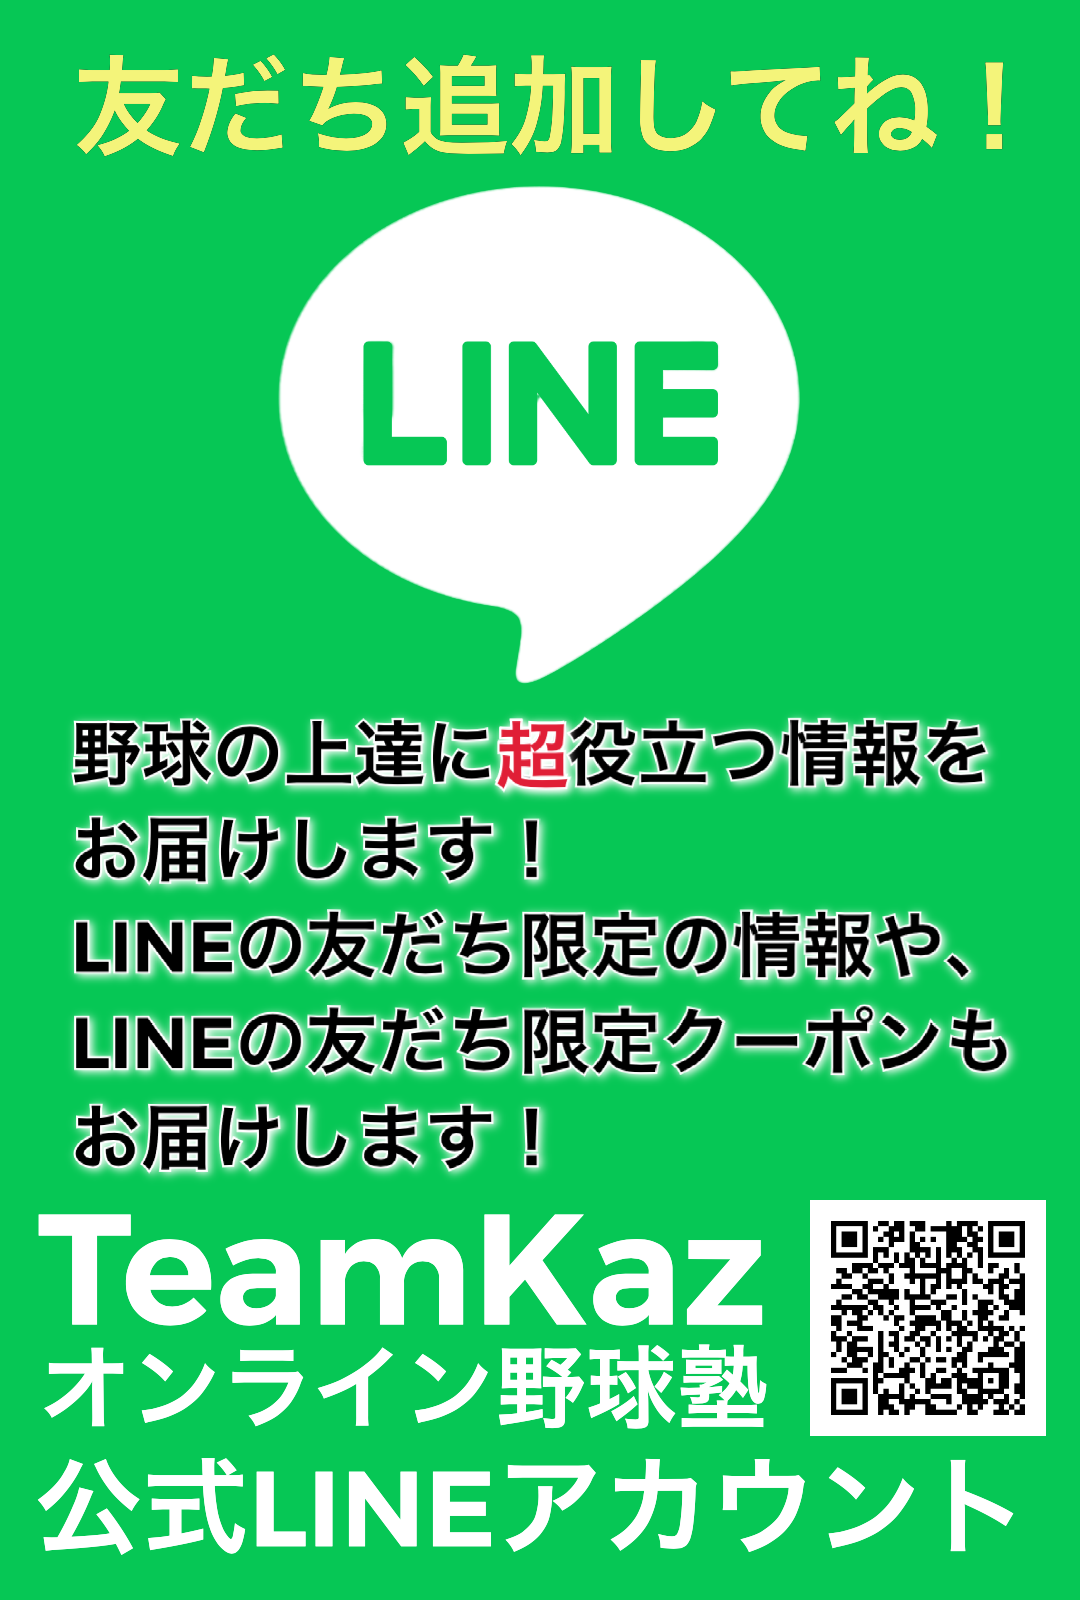 TeamKazオンライン野球塾公式LINEアカウント